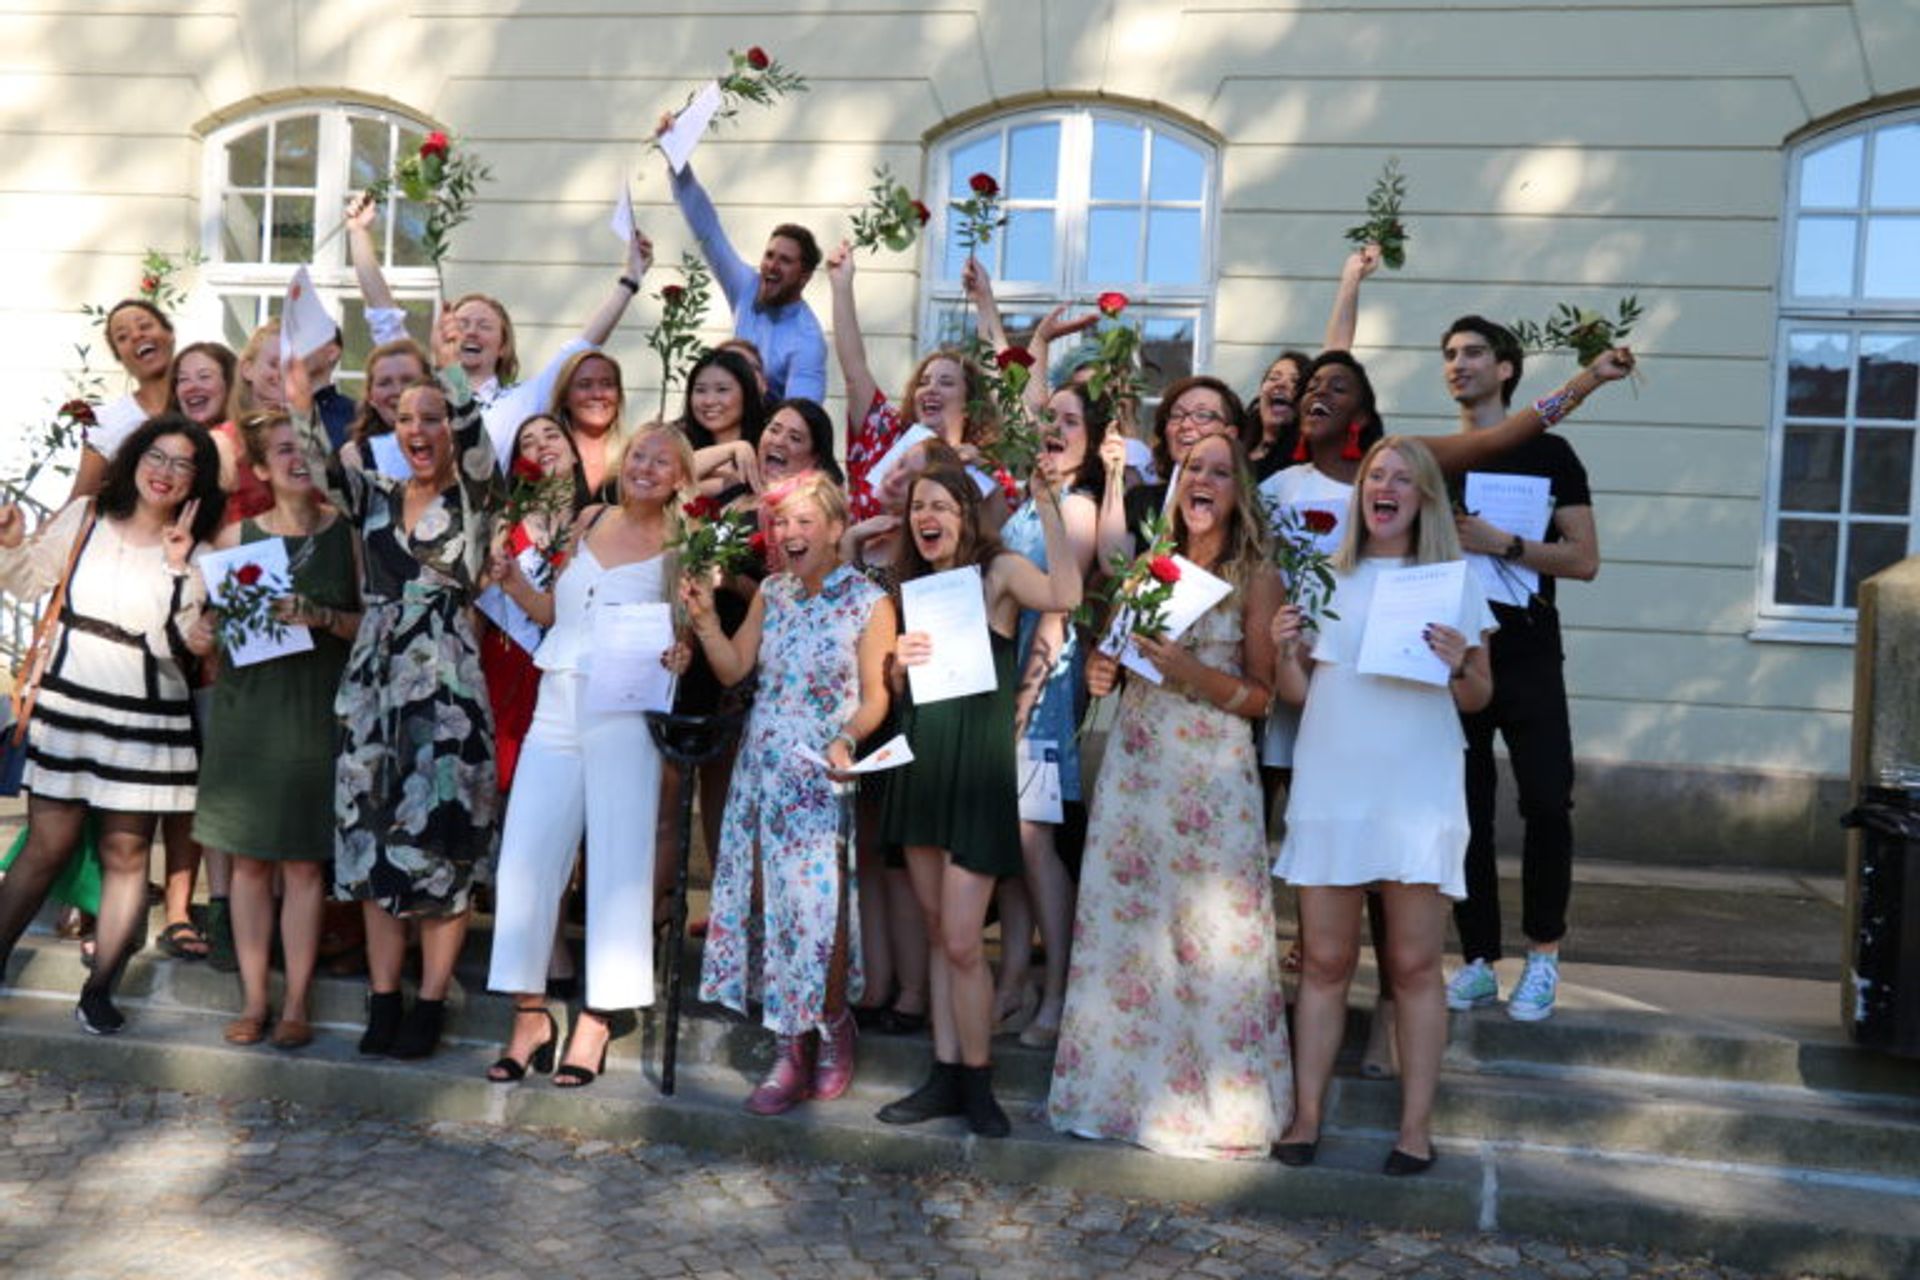 Masters Graduation in Sweden